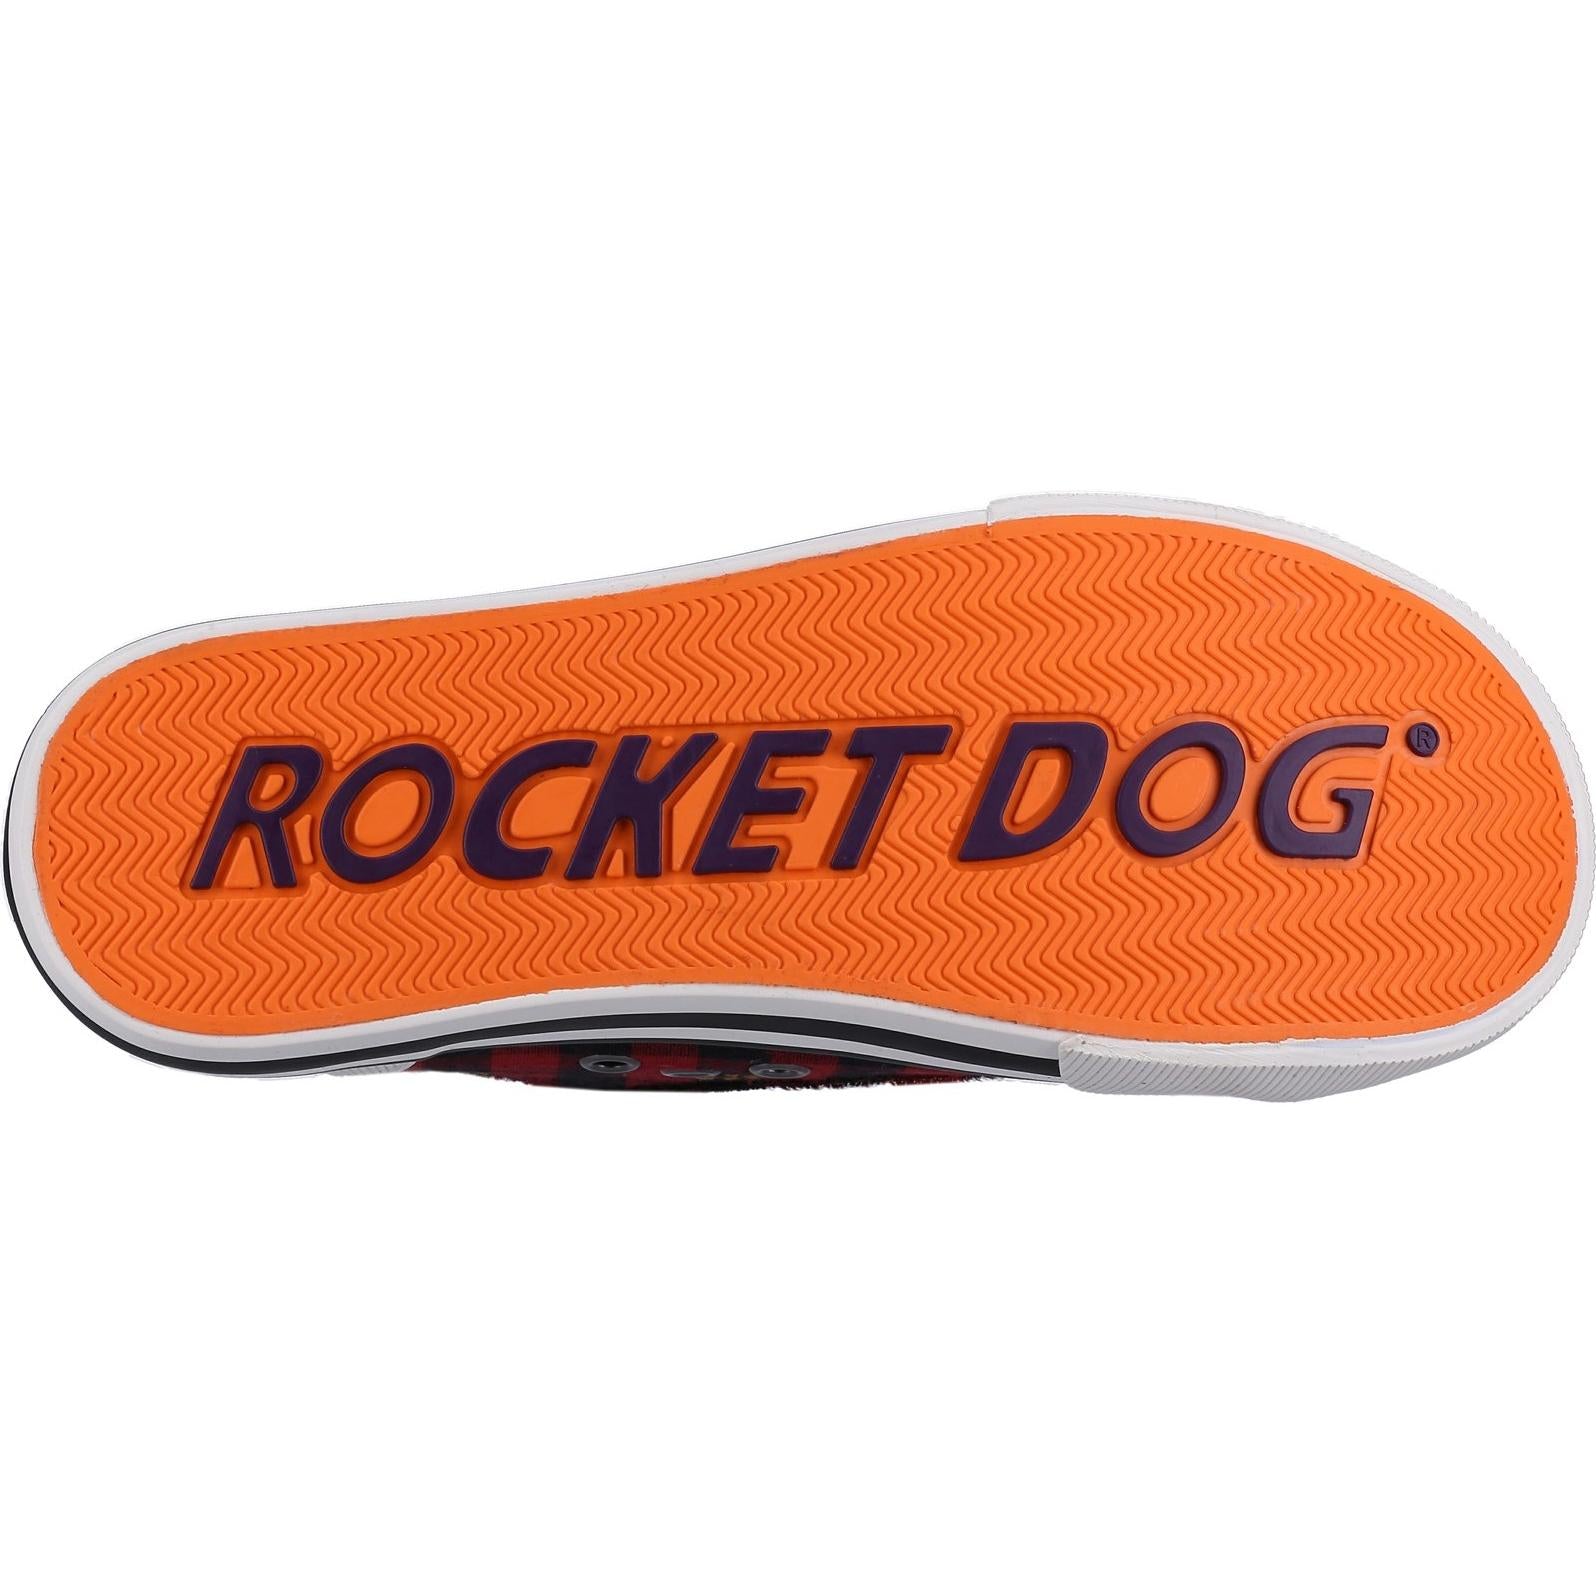 Rocket Dog Jazzin Dublin Shoes